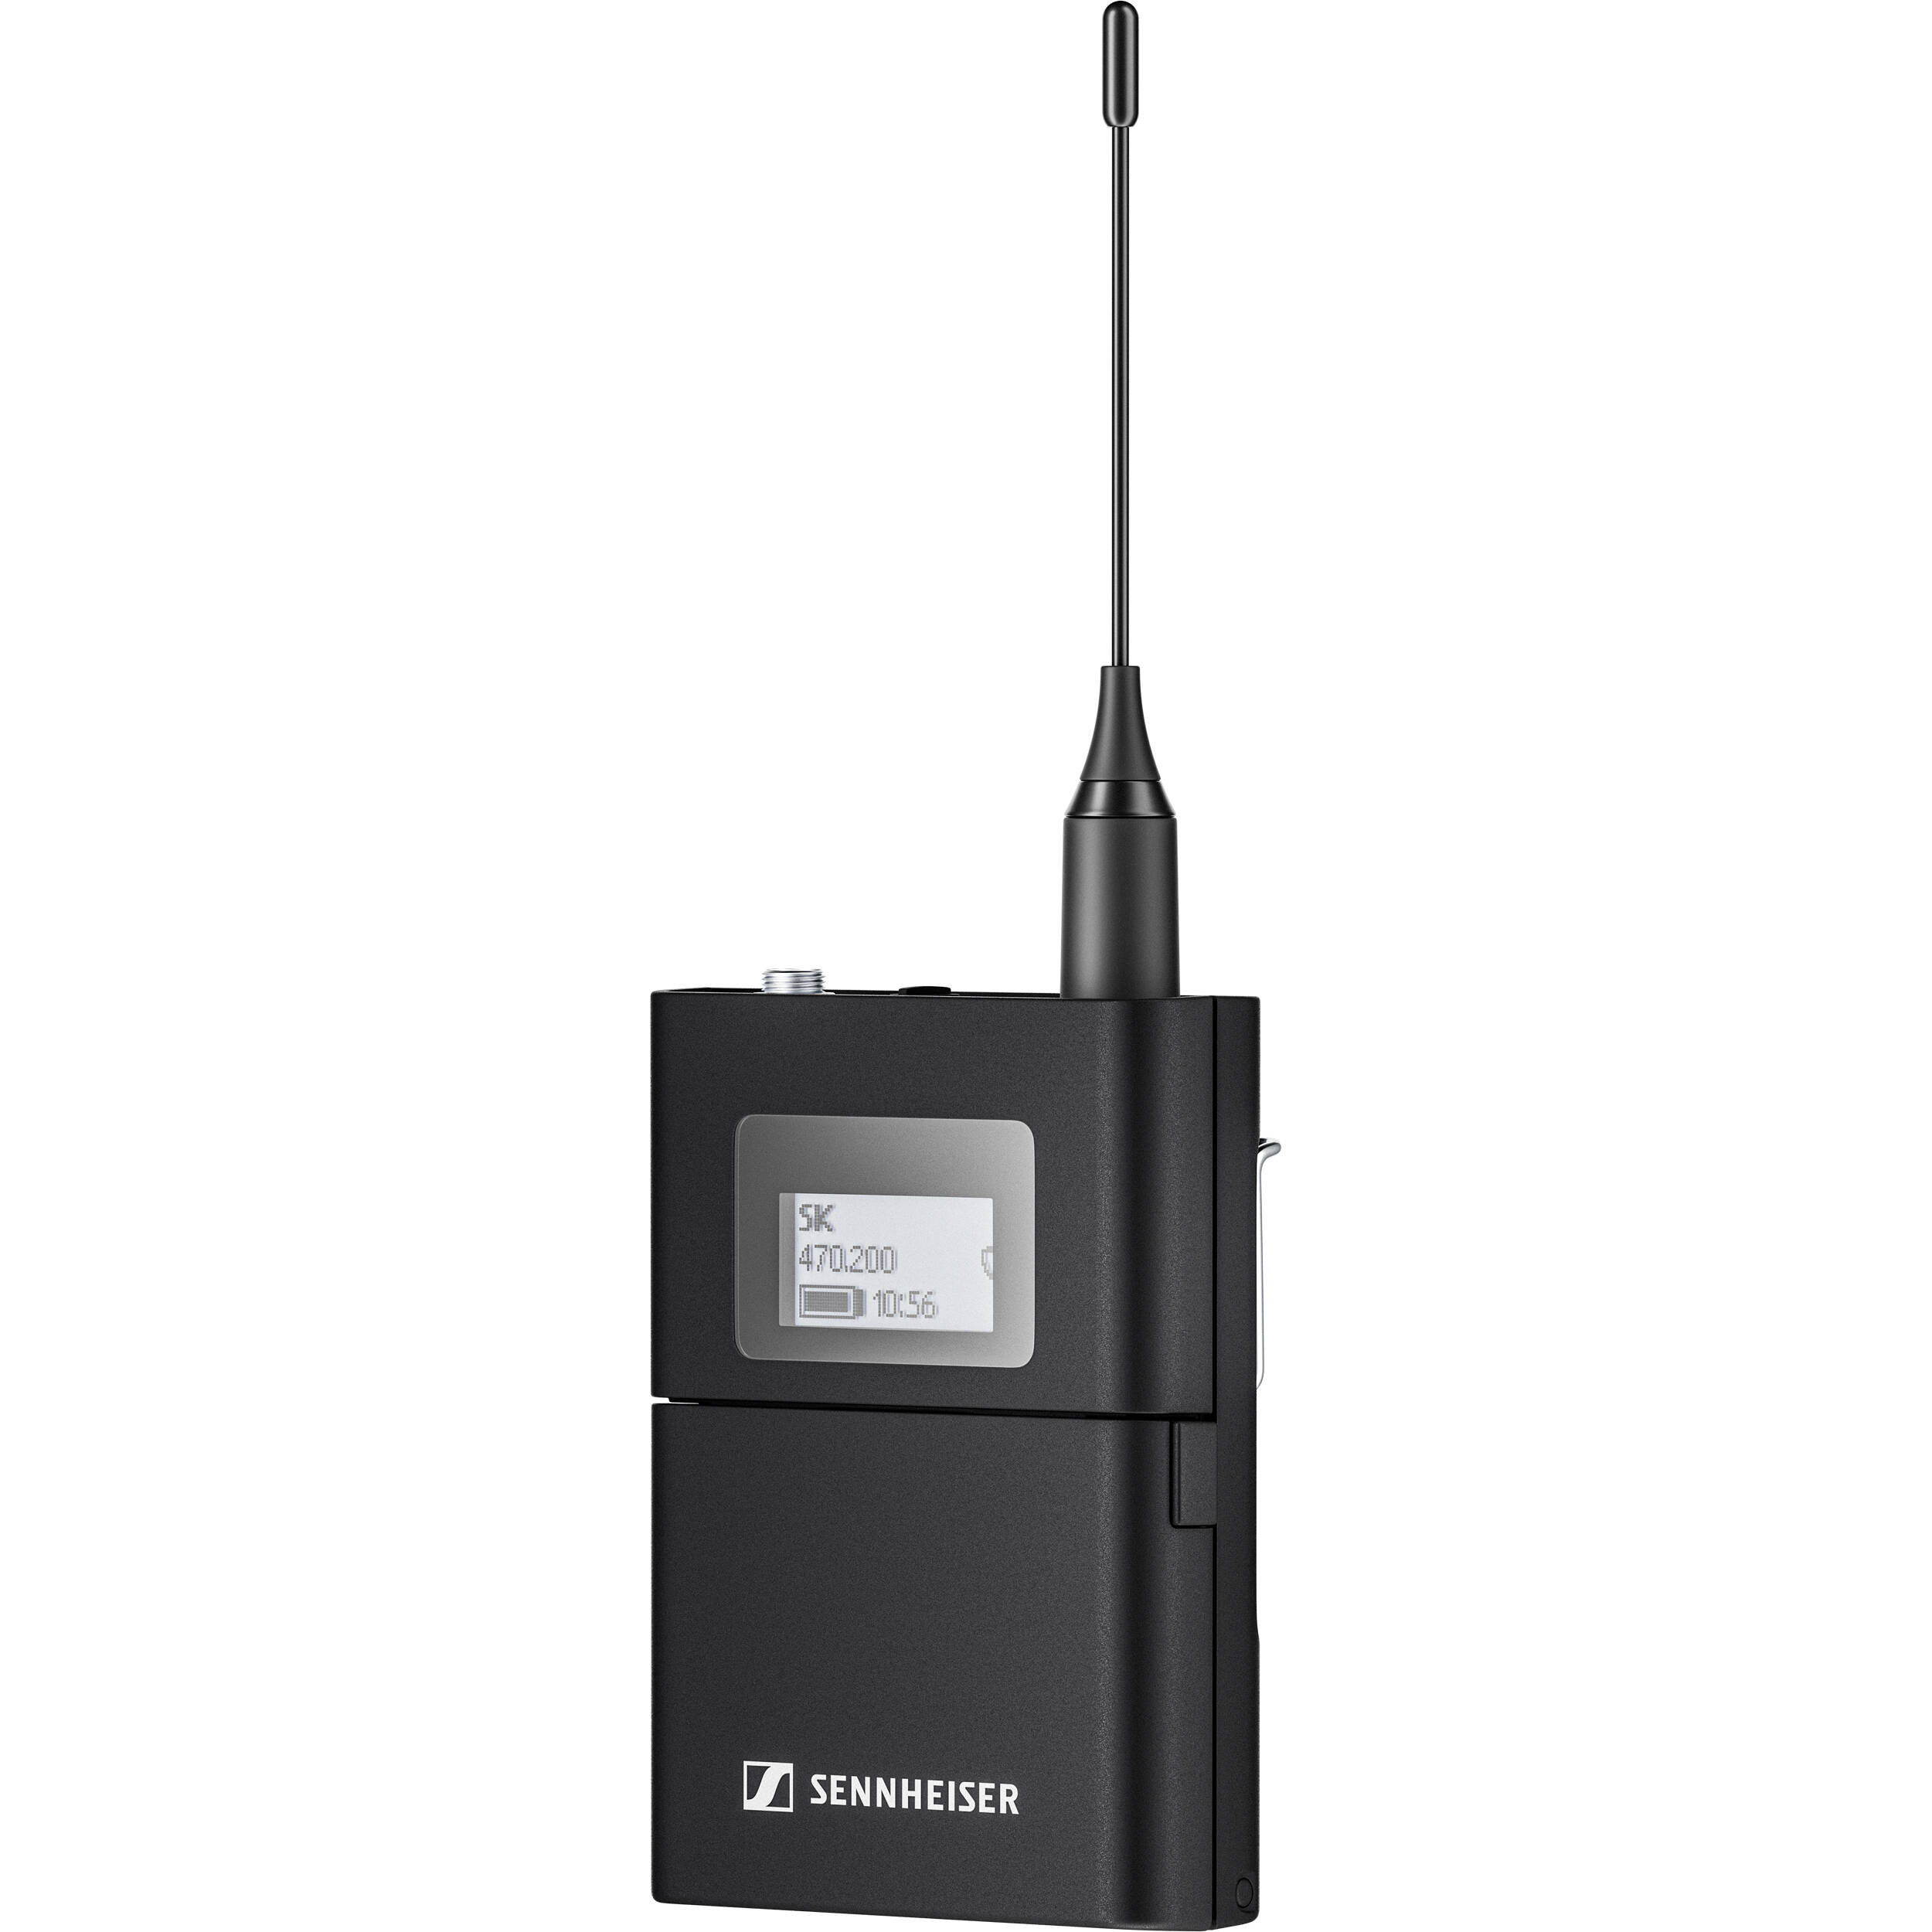 Sennheiser EW-DX SK (Q1-9: 470.2 - 550 MHz) | Bodypack Transmitter w/ 3.5mm Connector